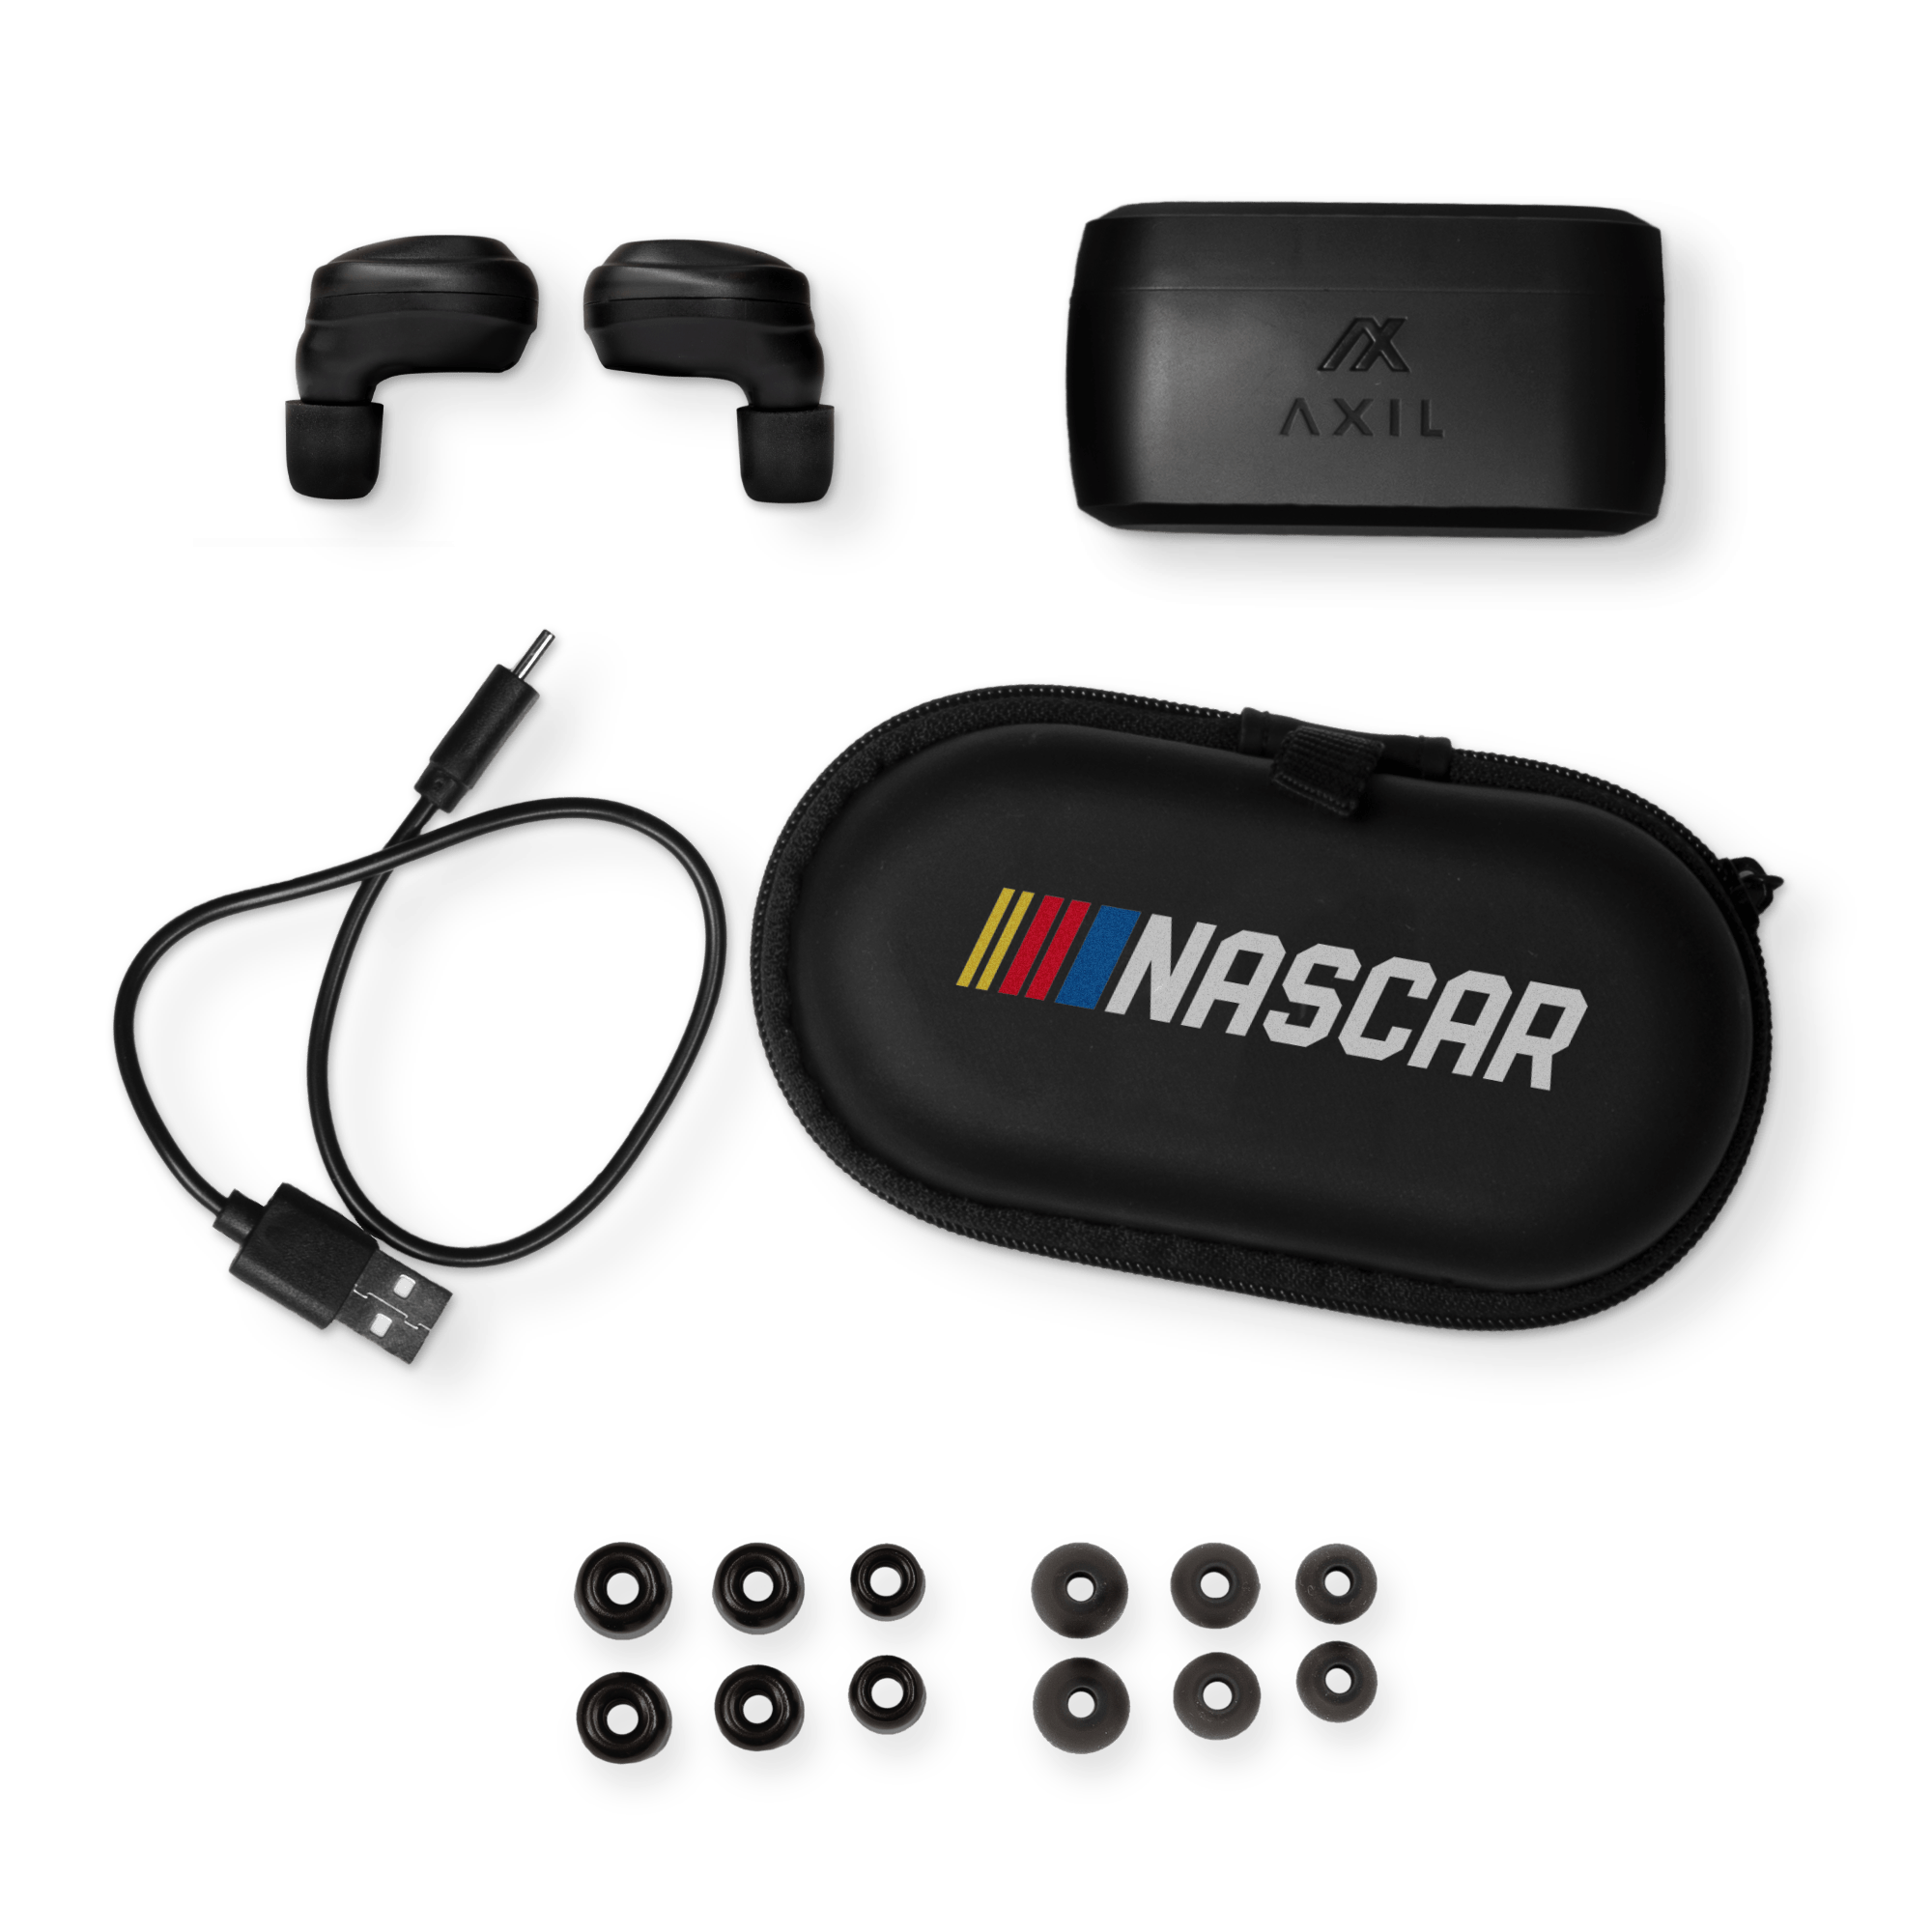 NASCAR XCOR